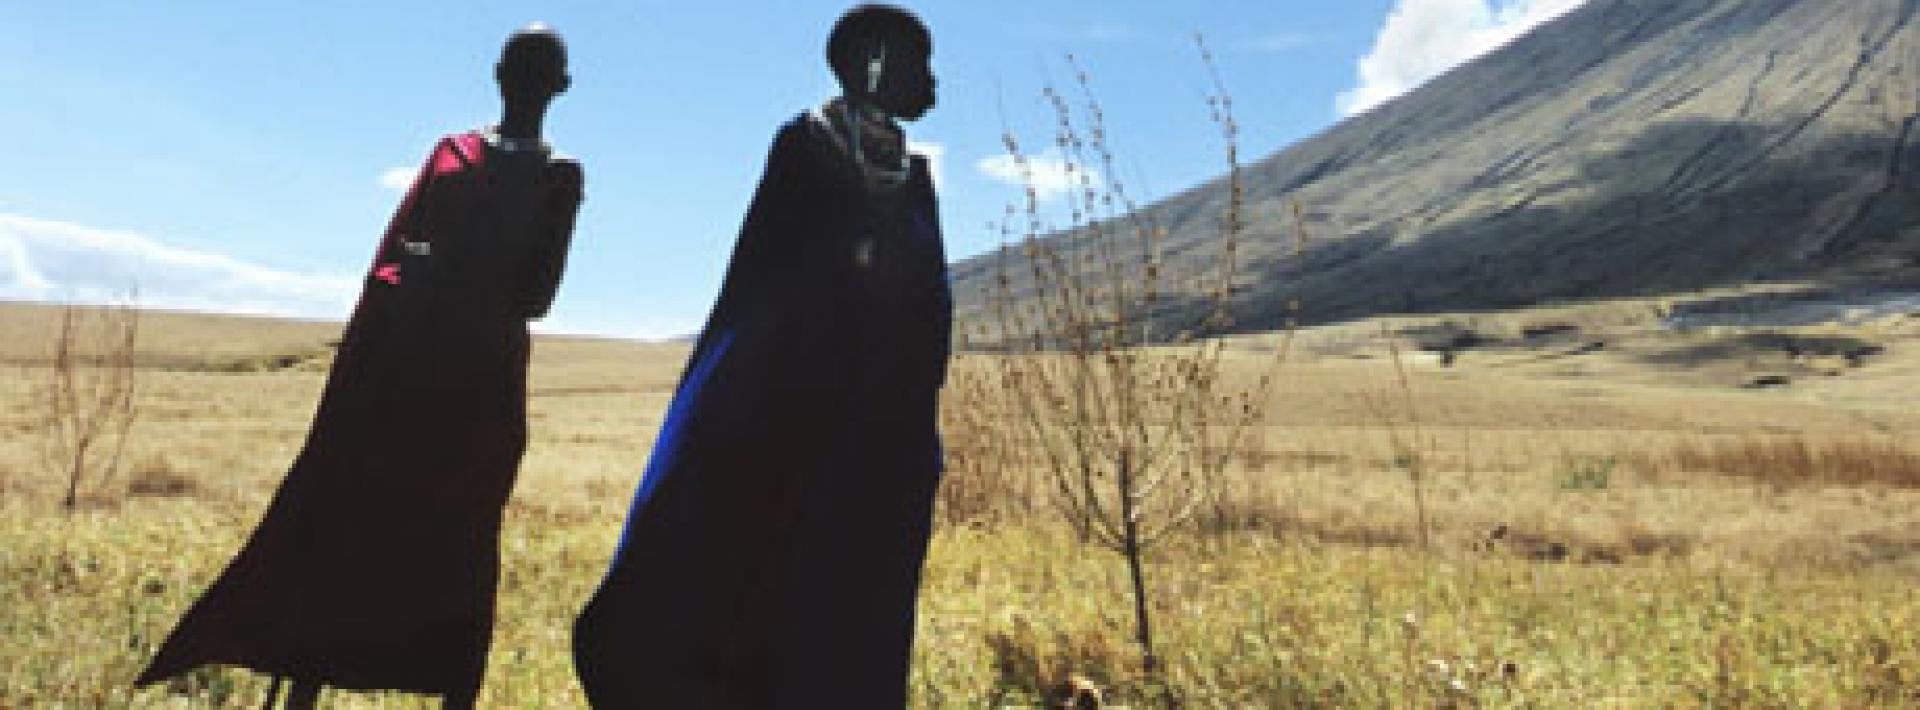 Maasai women tackle drought